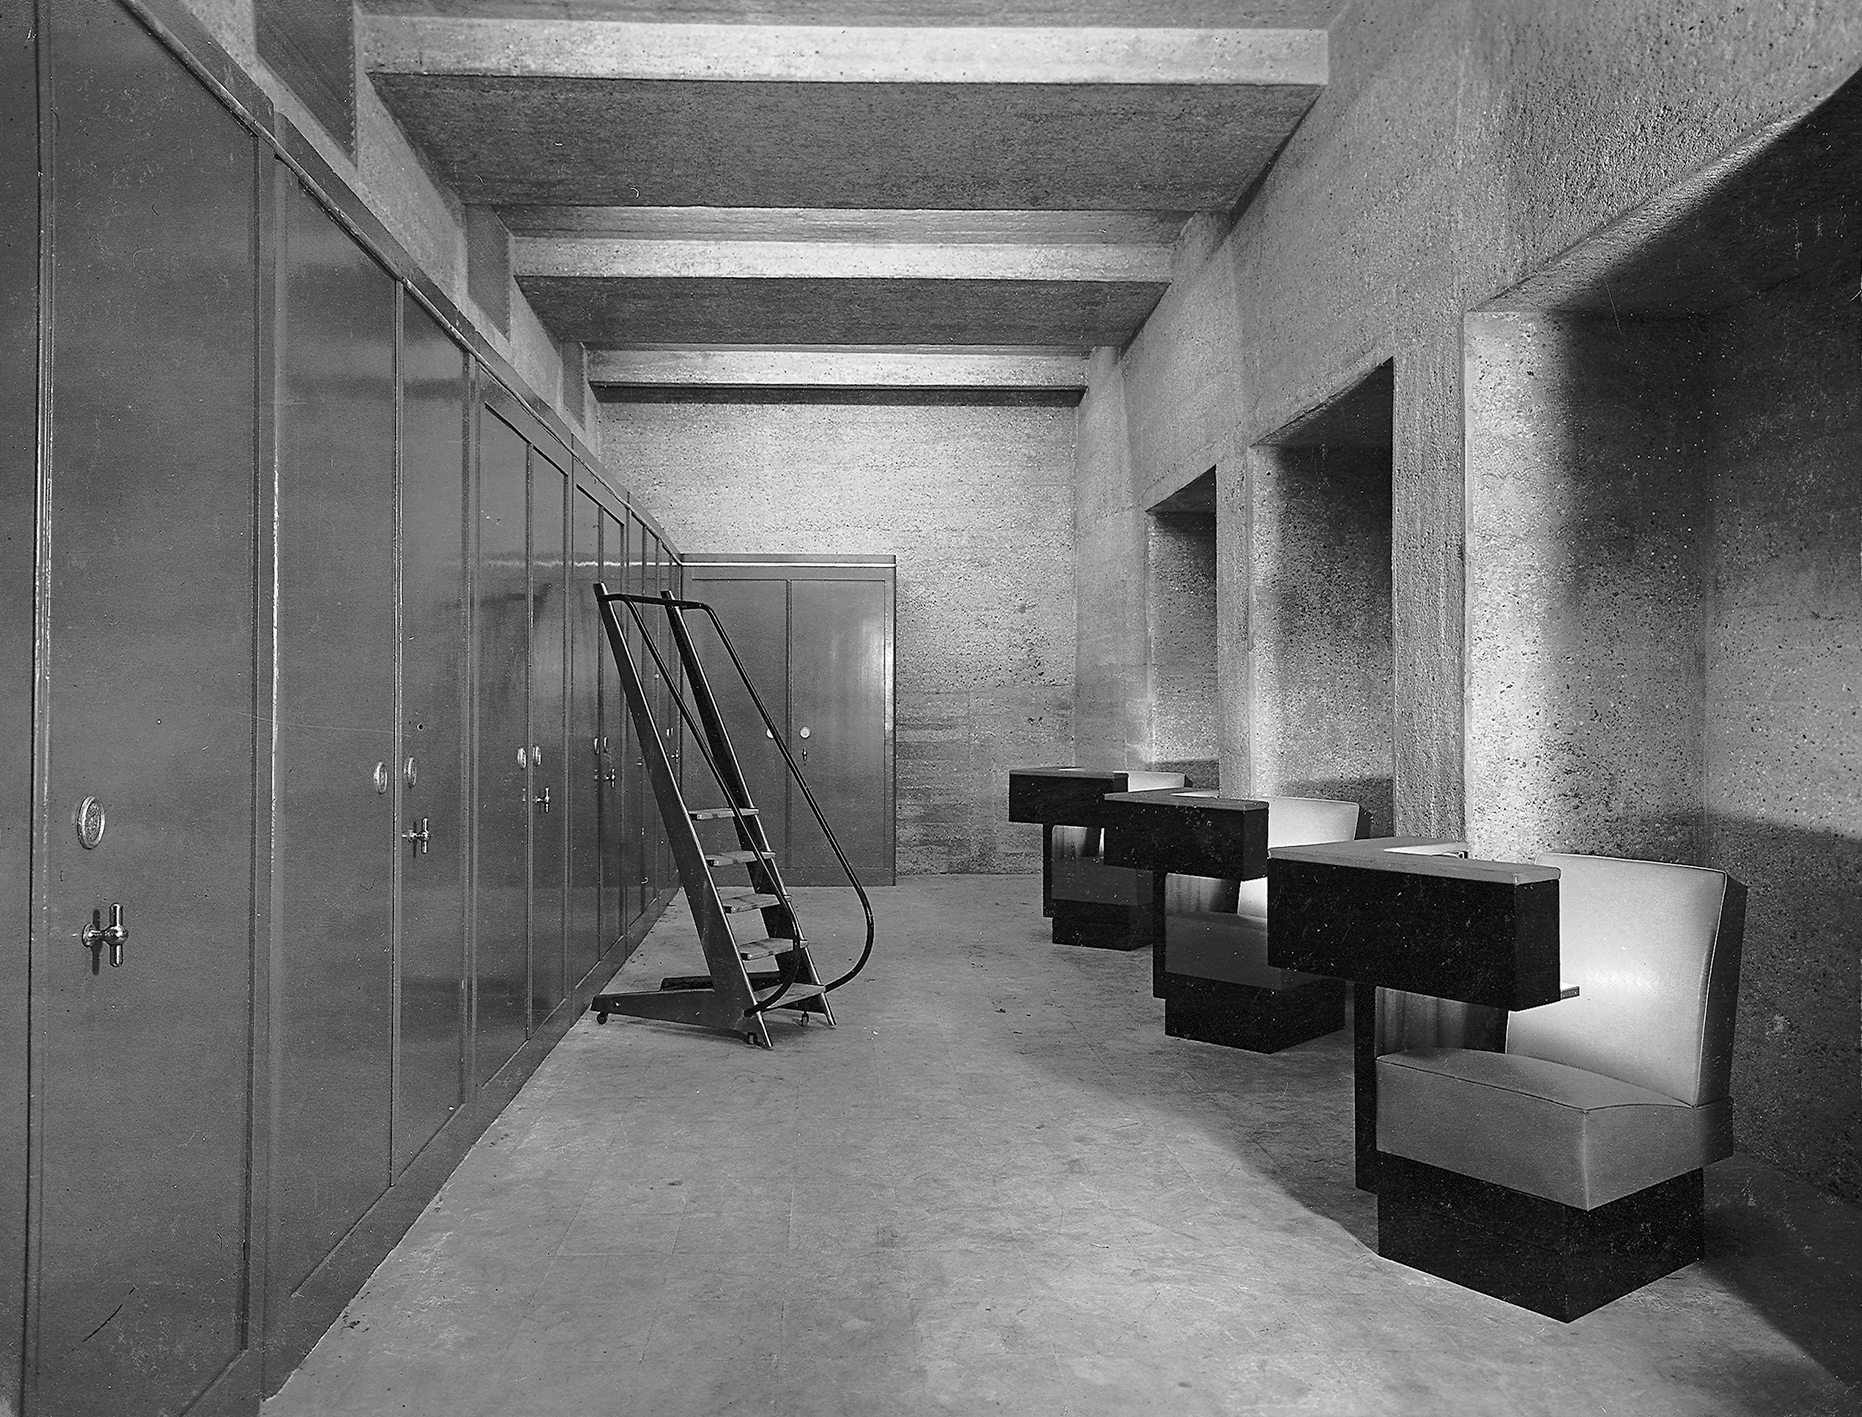 Société Générale bank, Douai (architect H. Chomette, 1951). Strongbox room equipped with a rolling stepladder.